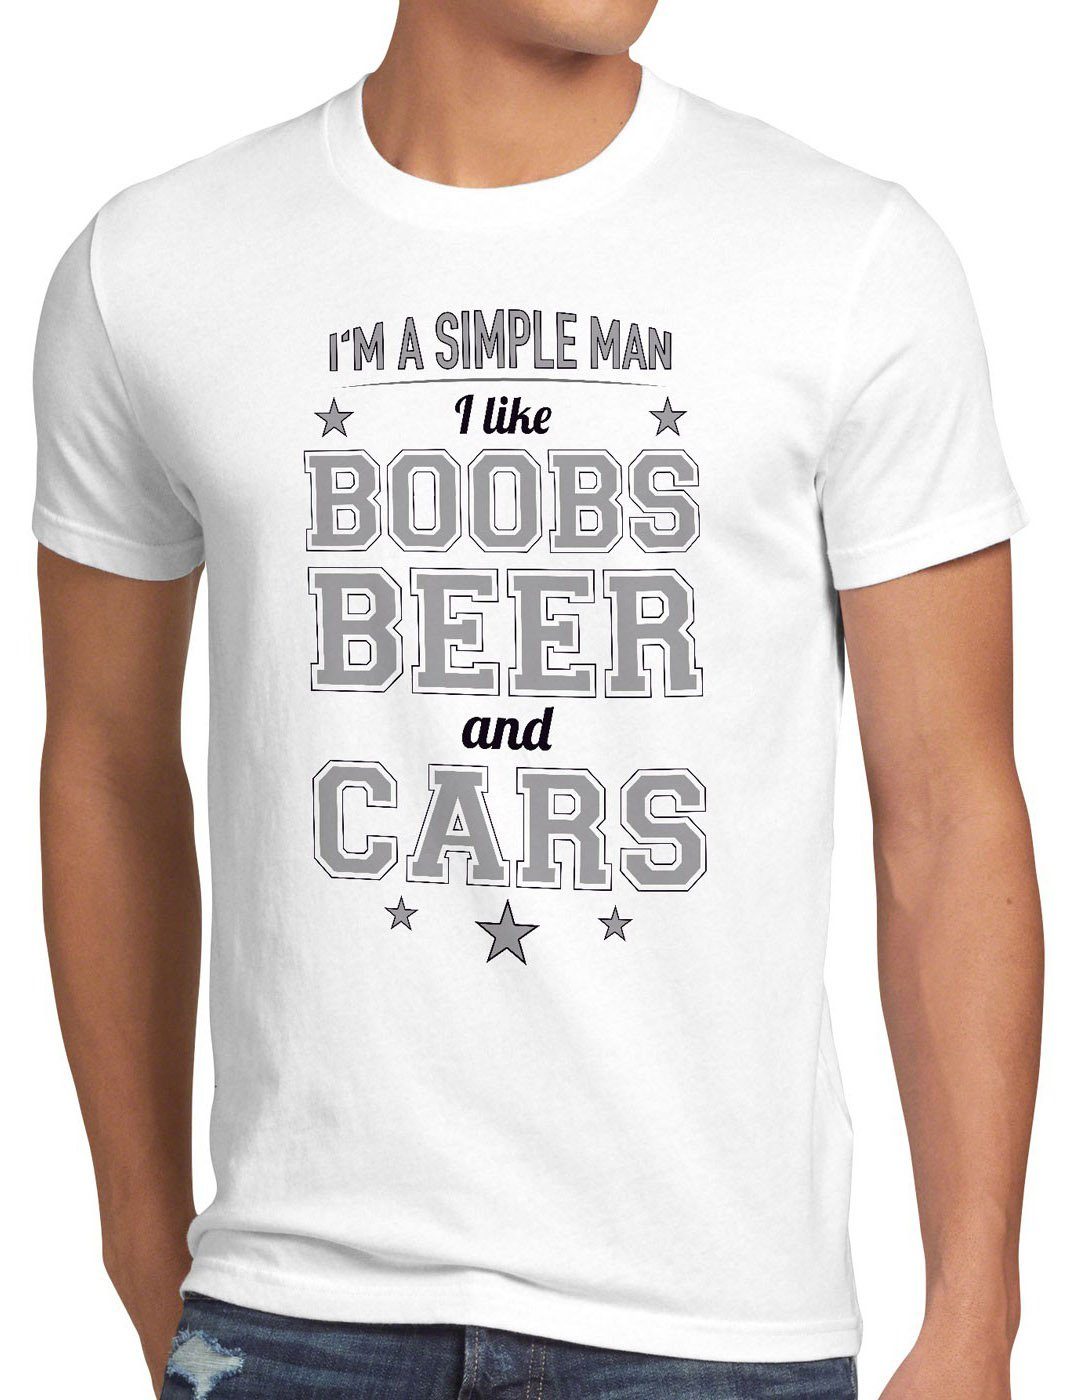 Print-Shirt spruch bier tuning funshirt beer Simple boobs style3 weiß titten Man T-Shirt auto Herren car